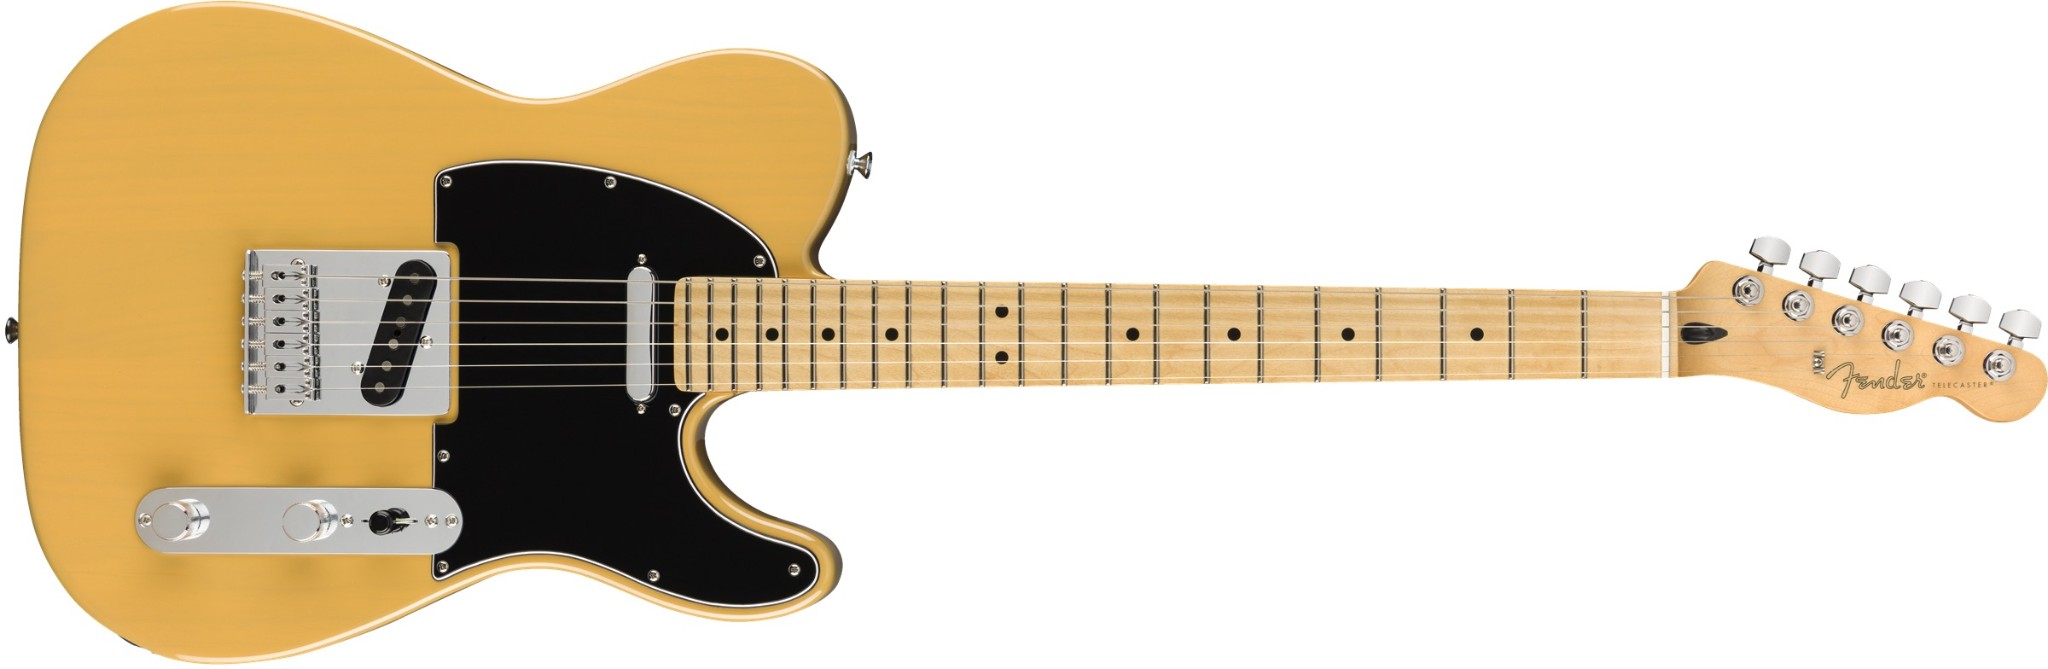 Fender Player Tele In Butterscotch Blonde